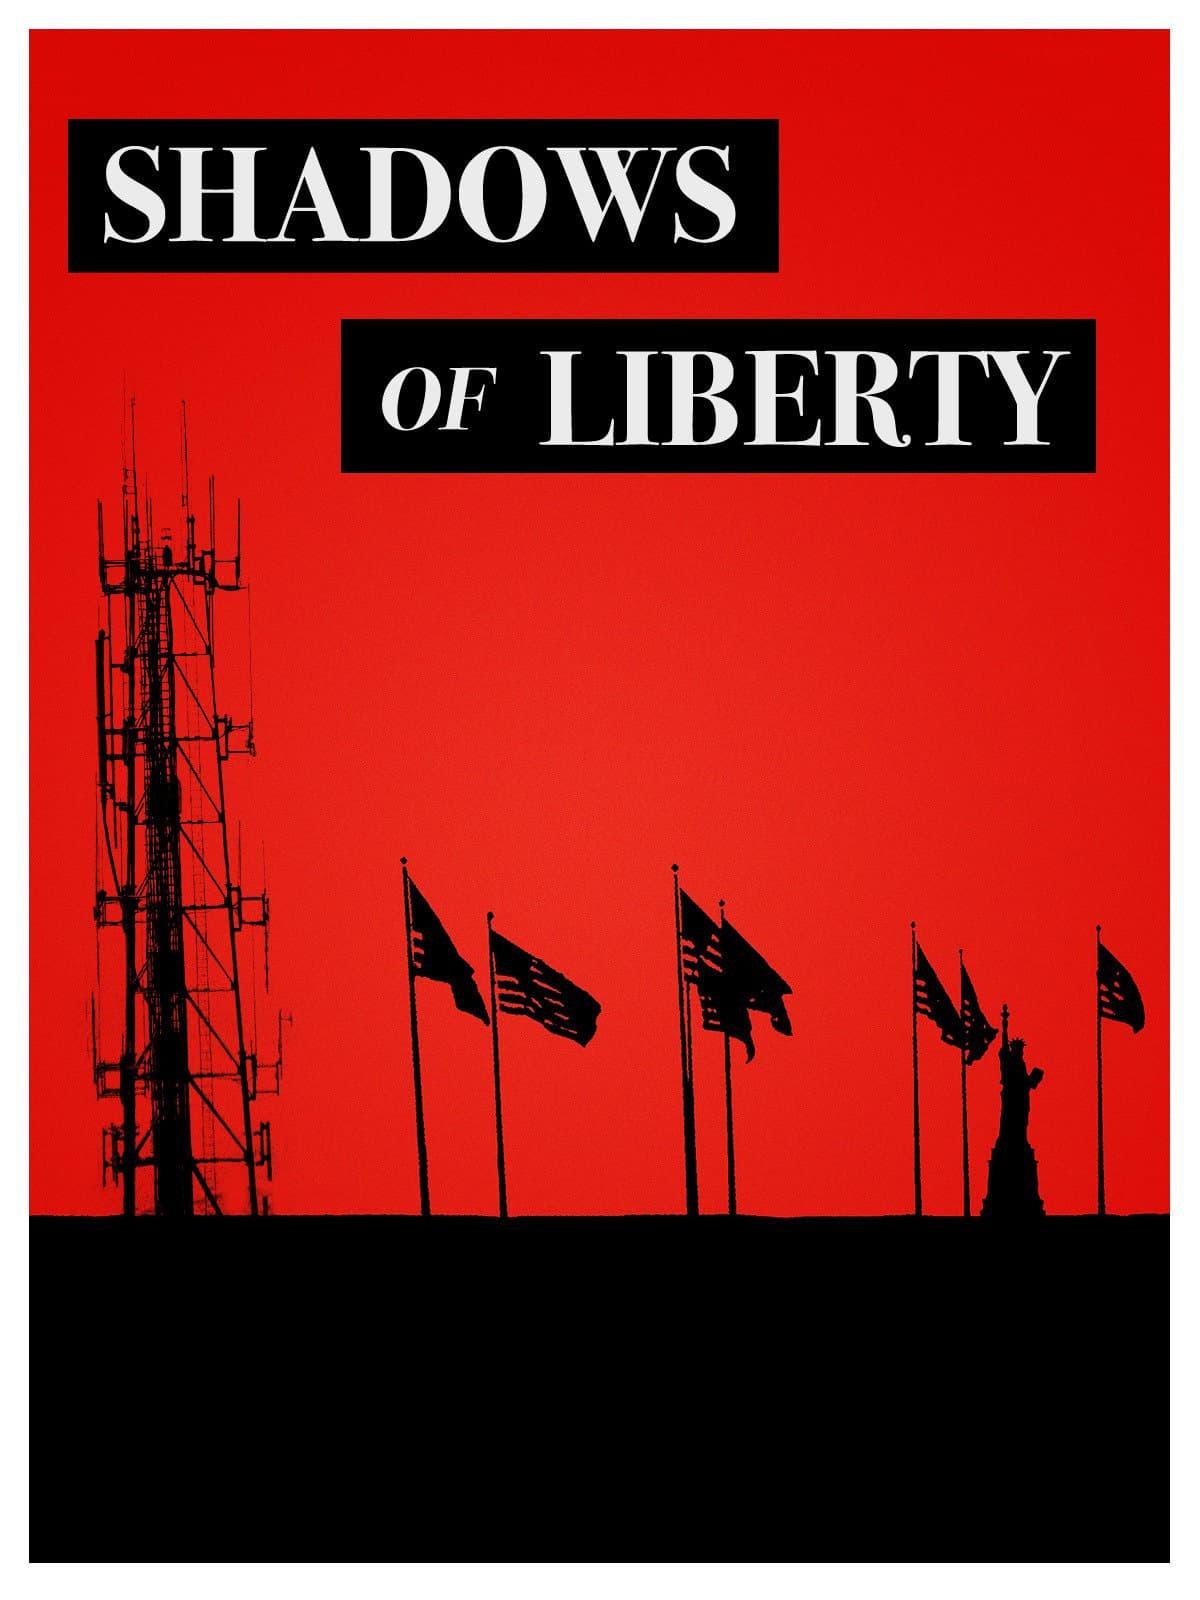 Shadows of Liberty poster